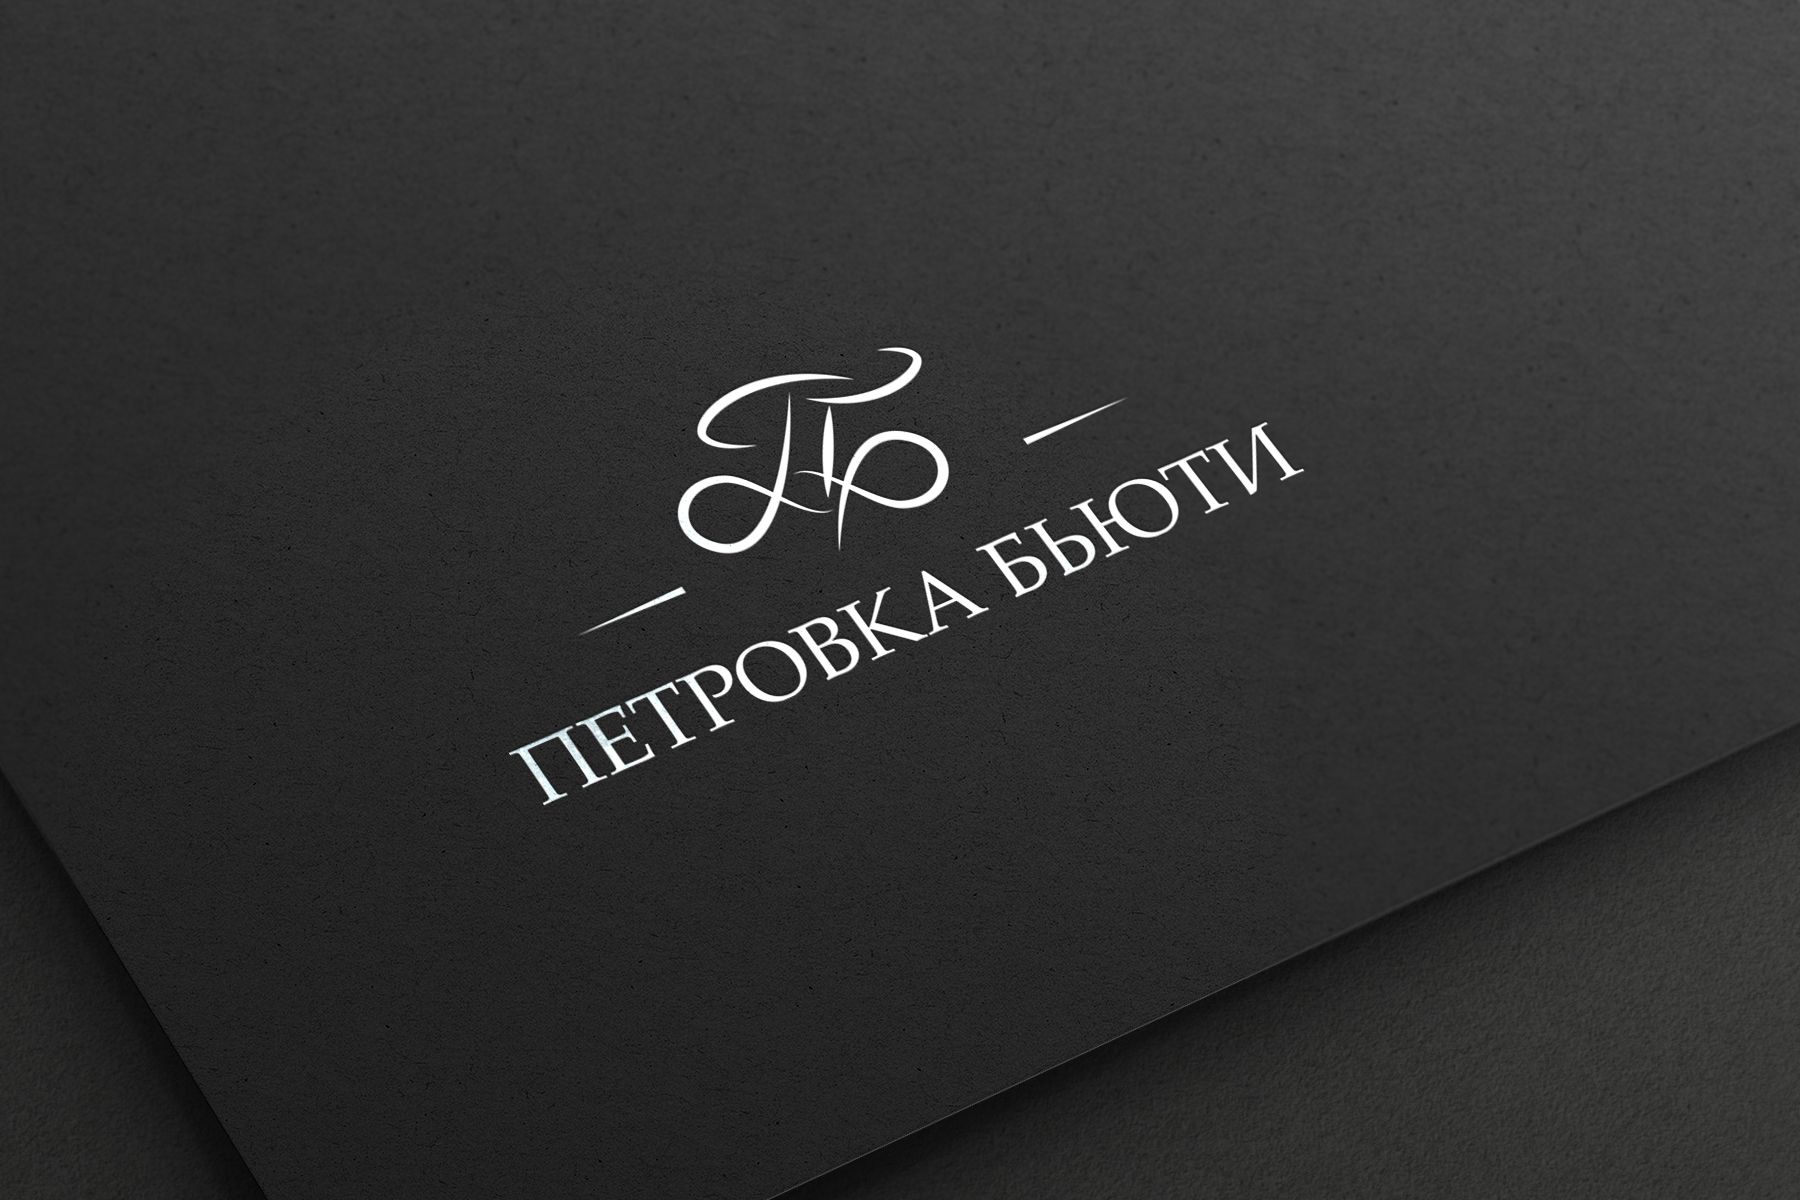 Логотип для Петровка - Бьюти - дизайнер kirilln84